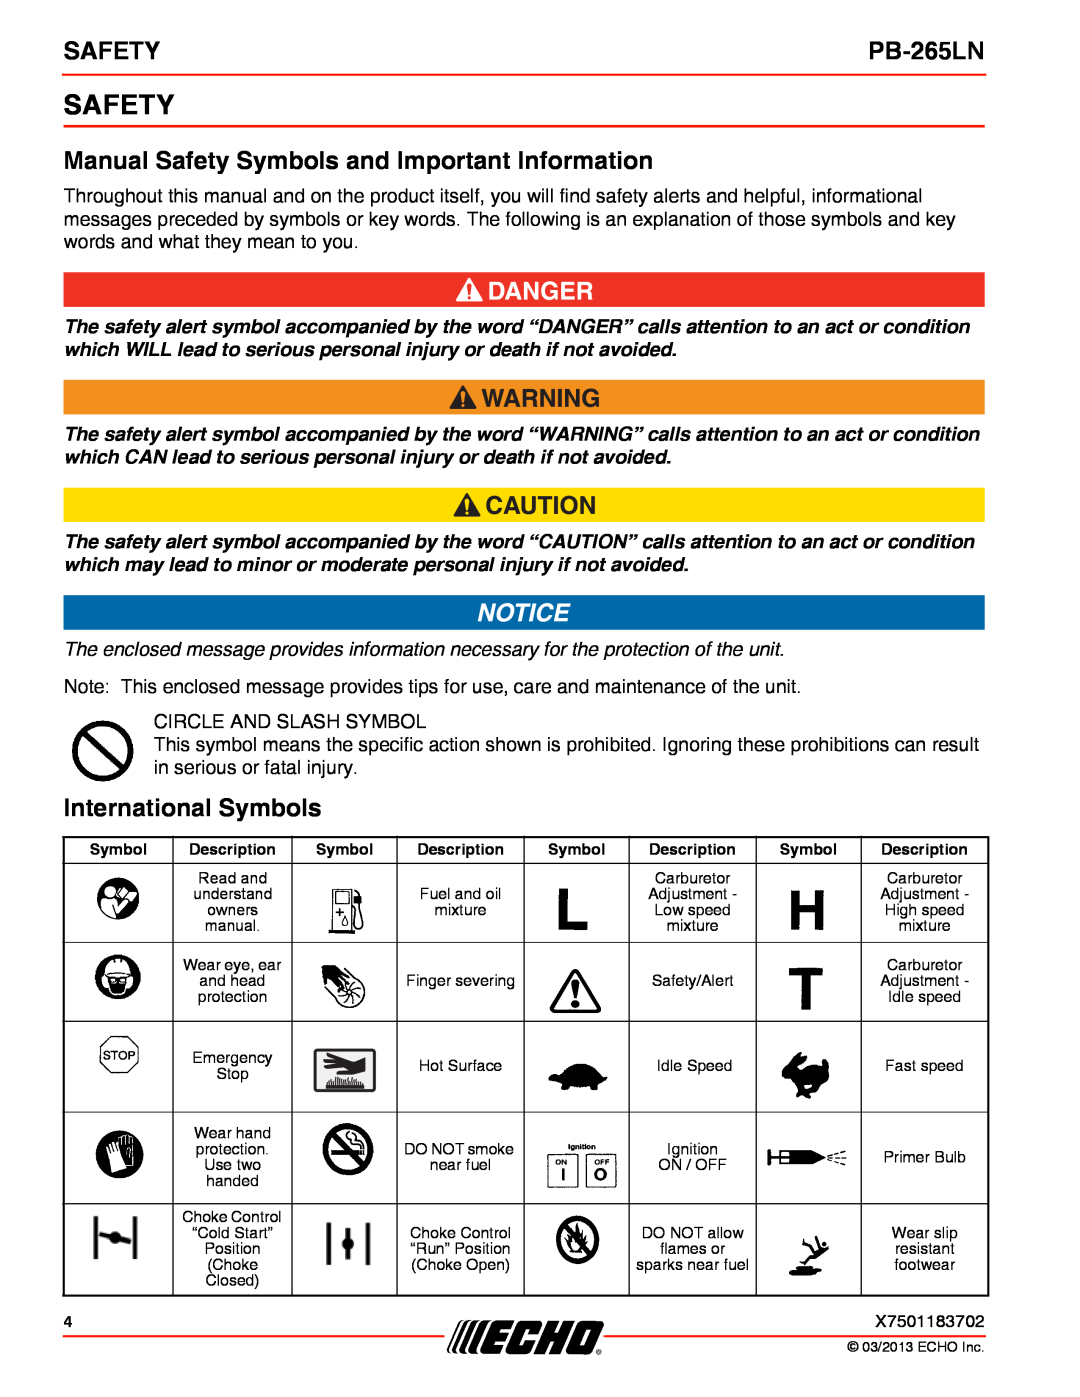 Echo PB-265LN specifications Manual Safety Symbols and Important Information, International Symbols 